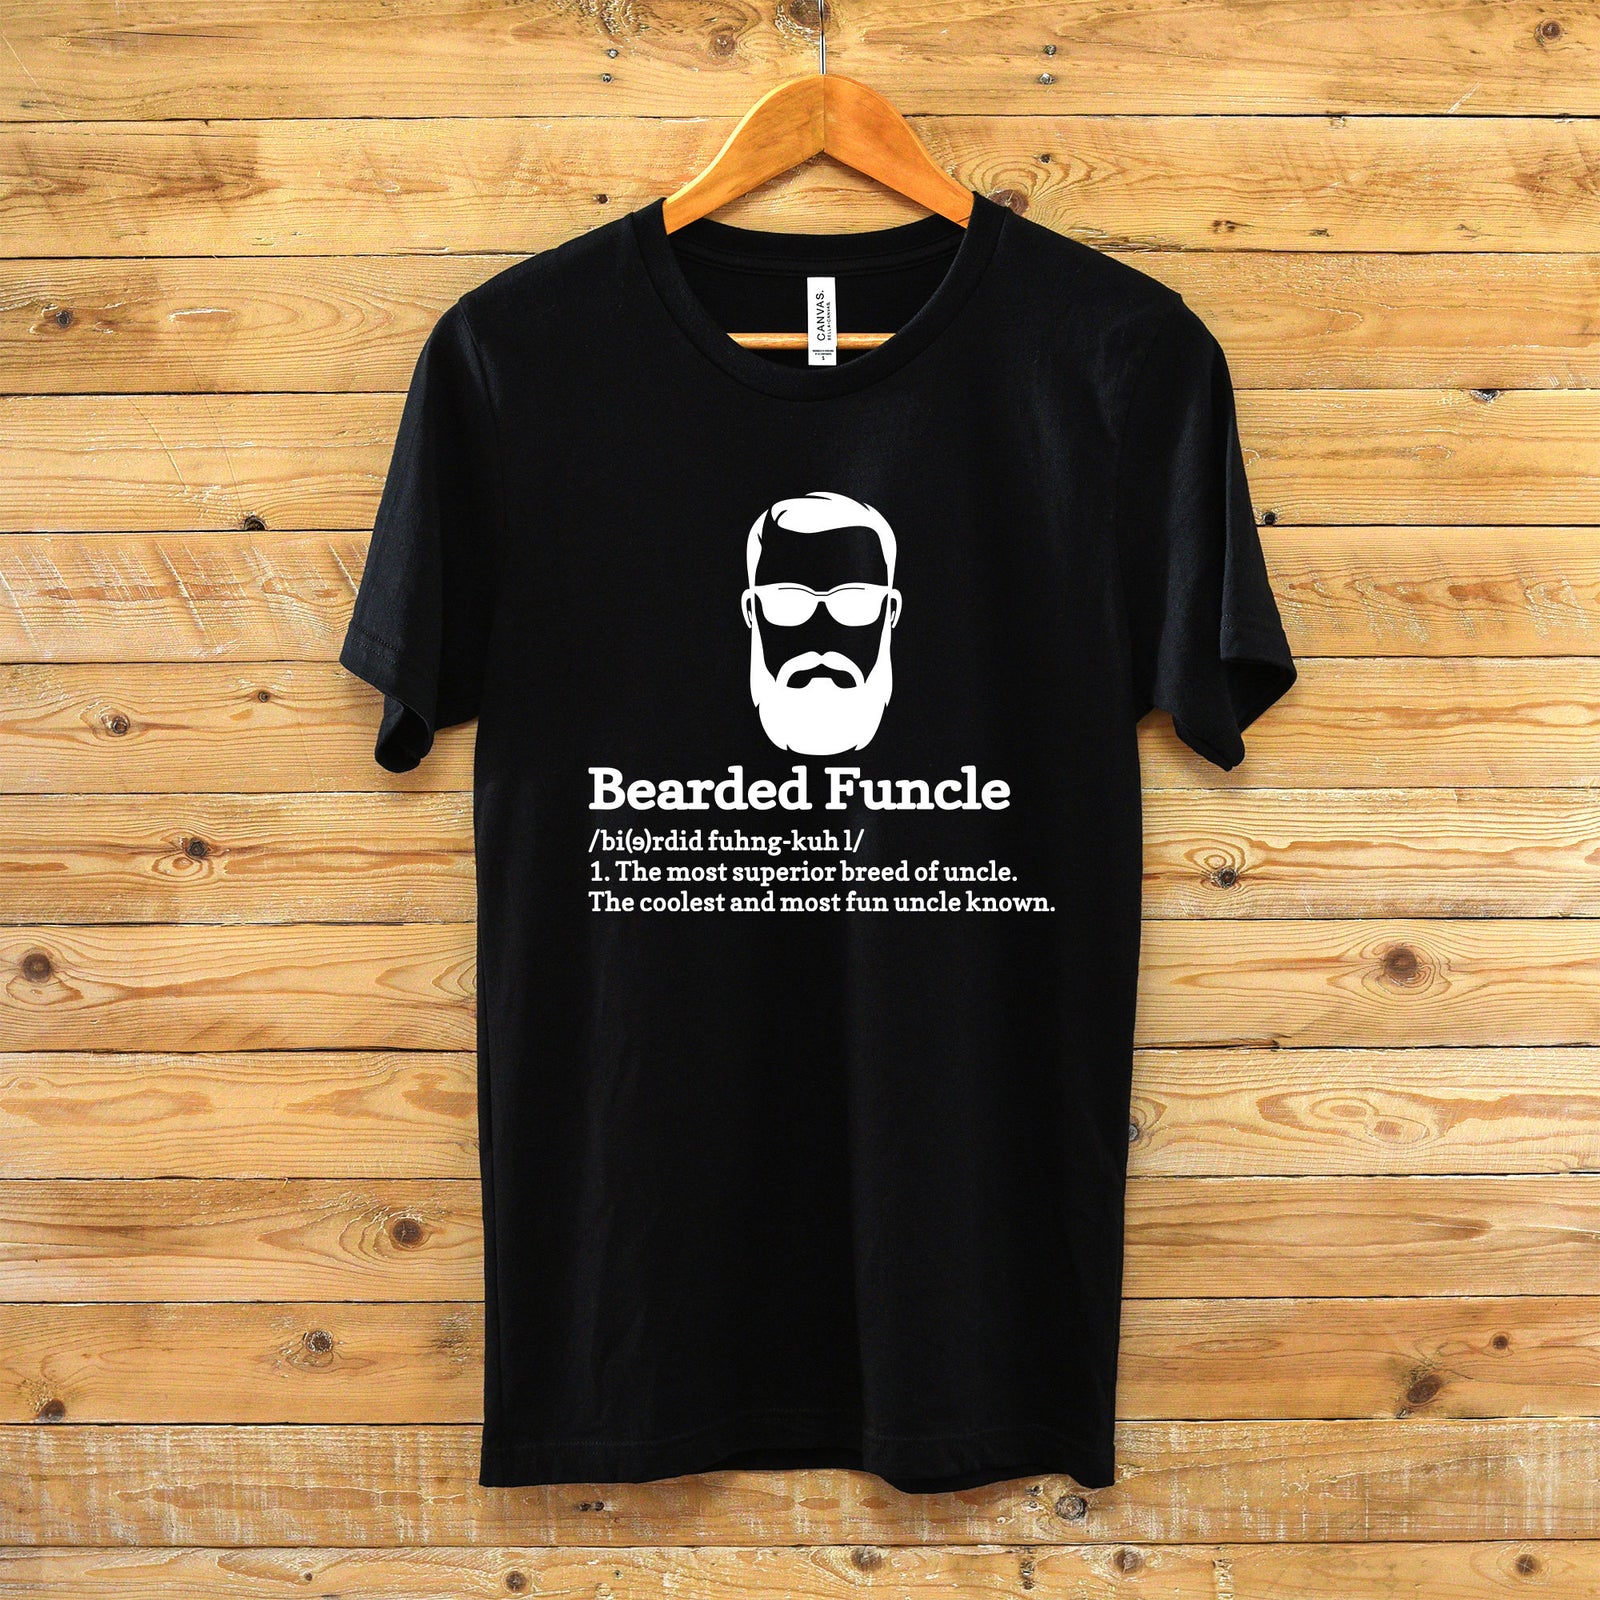 Funcle T Shirt- Funny Men's T-shirt - World's Best Uncle T Shirt Gift - Uncle Statement Shirt